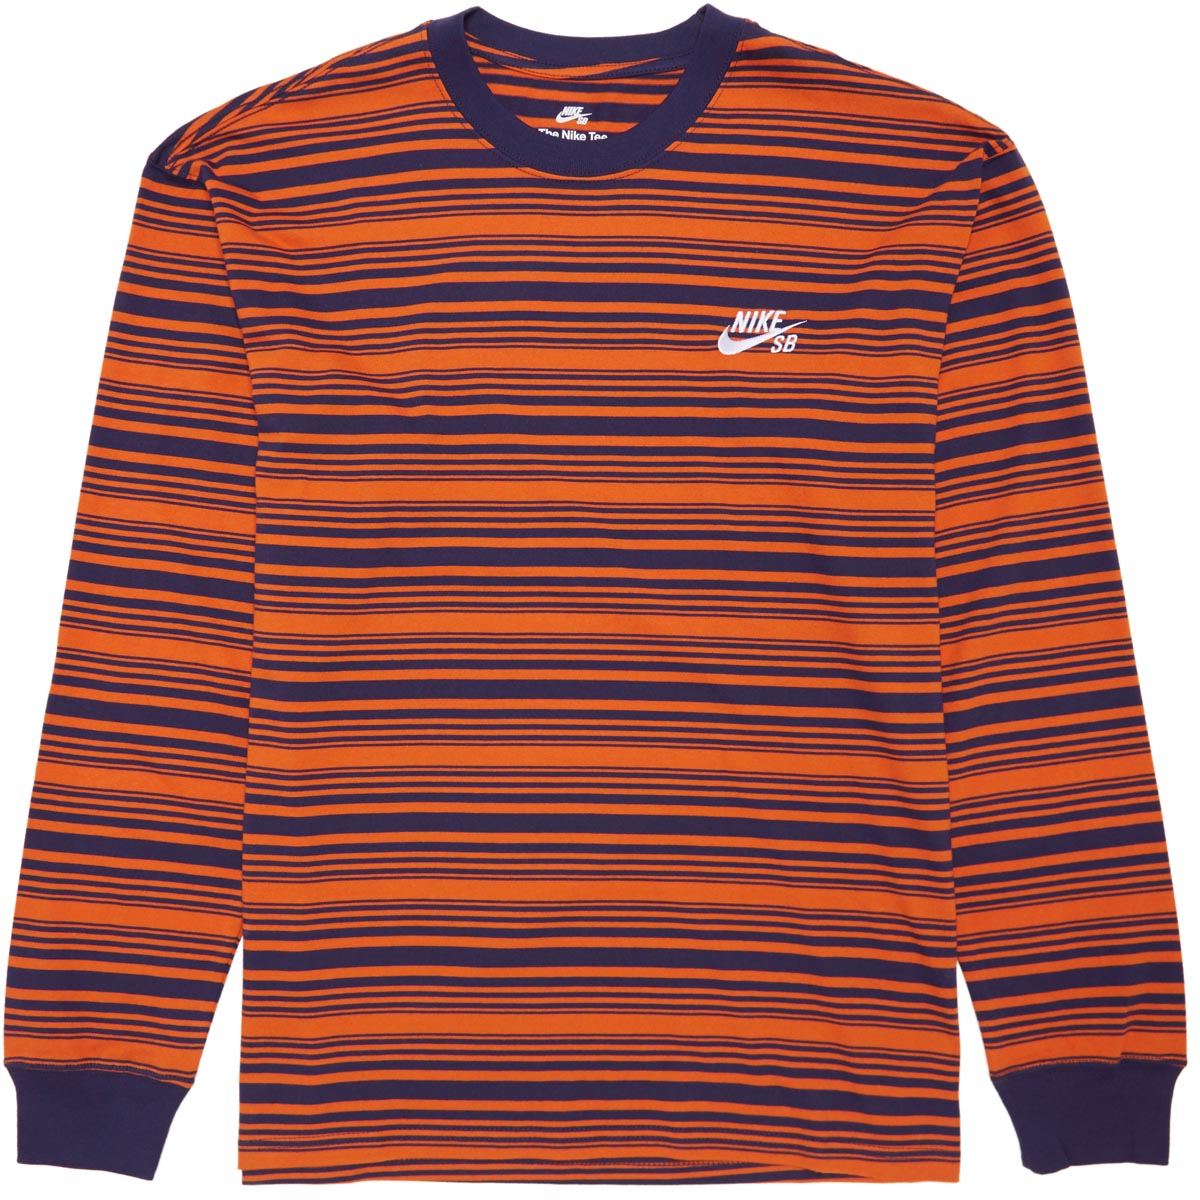 Nike SB Long Sleeve Striped T-Shirt - Purple Ink/Campfire Orange image 1